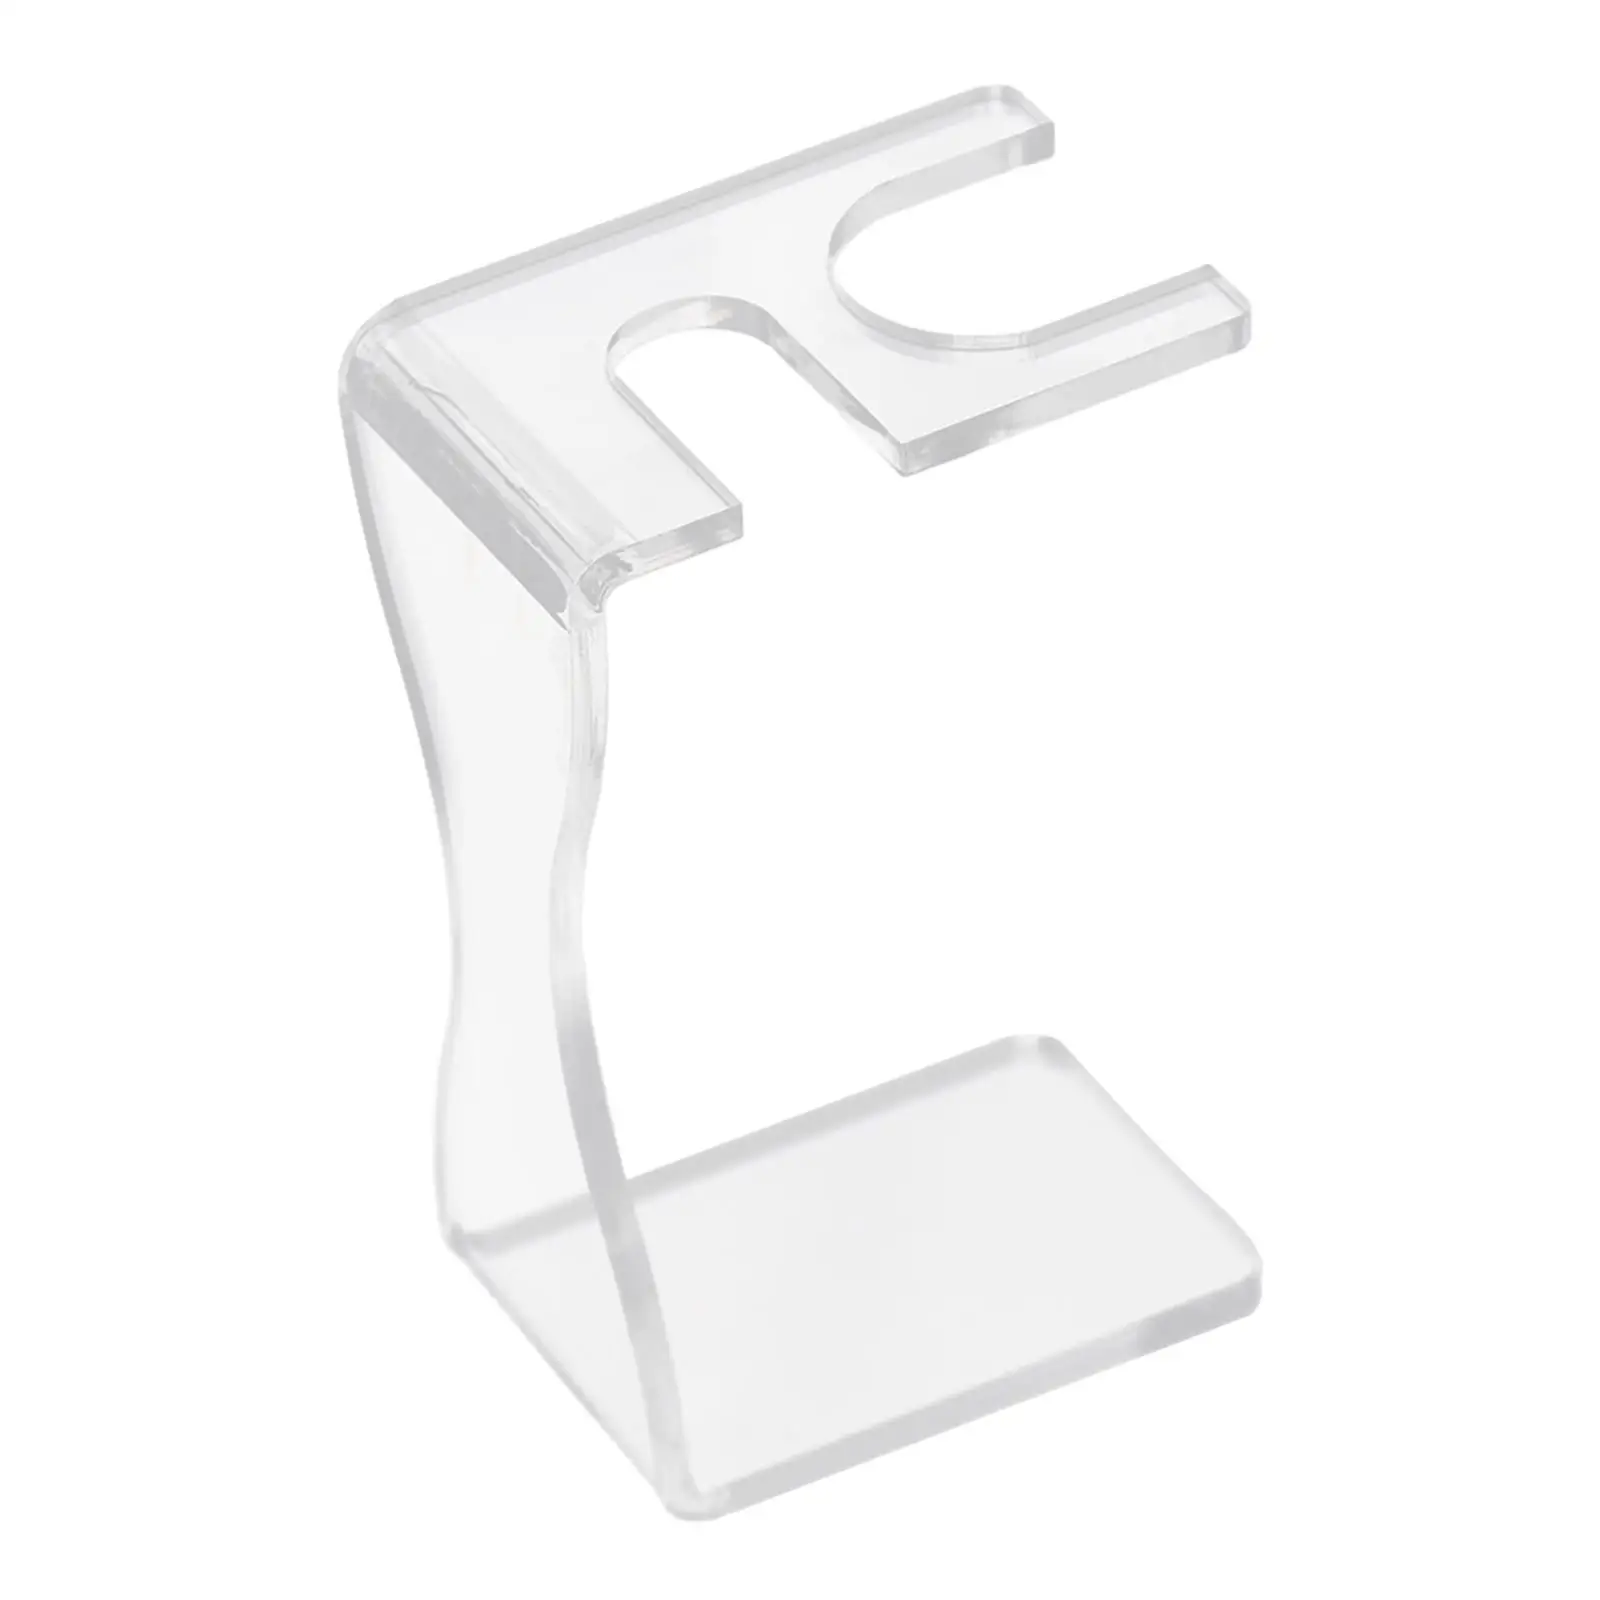 Manual Shaver Stand Holder Rack Multifunctional Functional Anti Slip Base Durable Height 11.2cm for Wet Shaving Enthusiastic